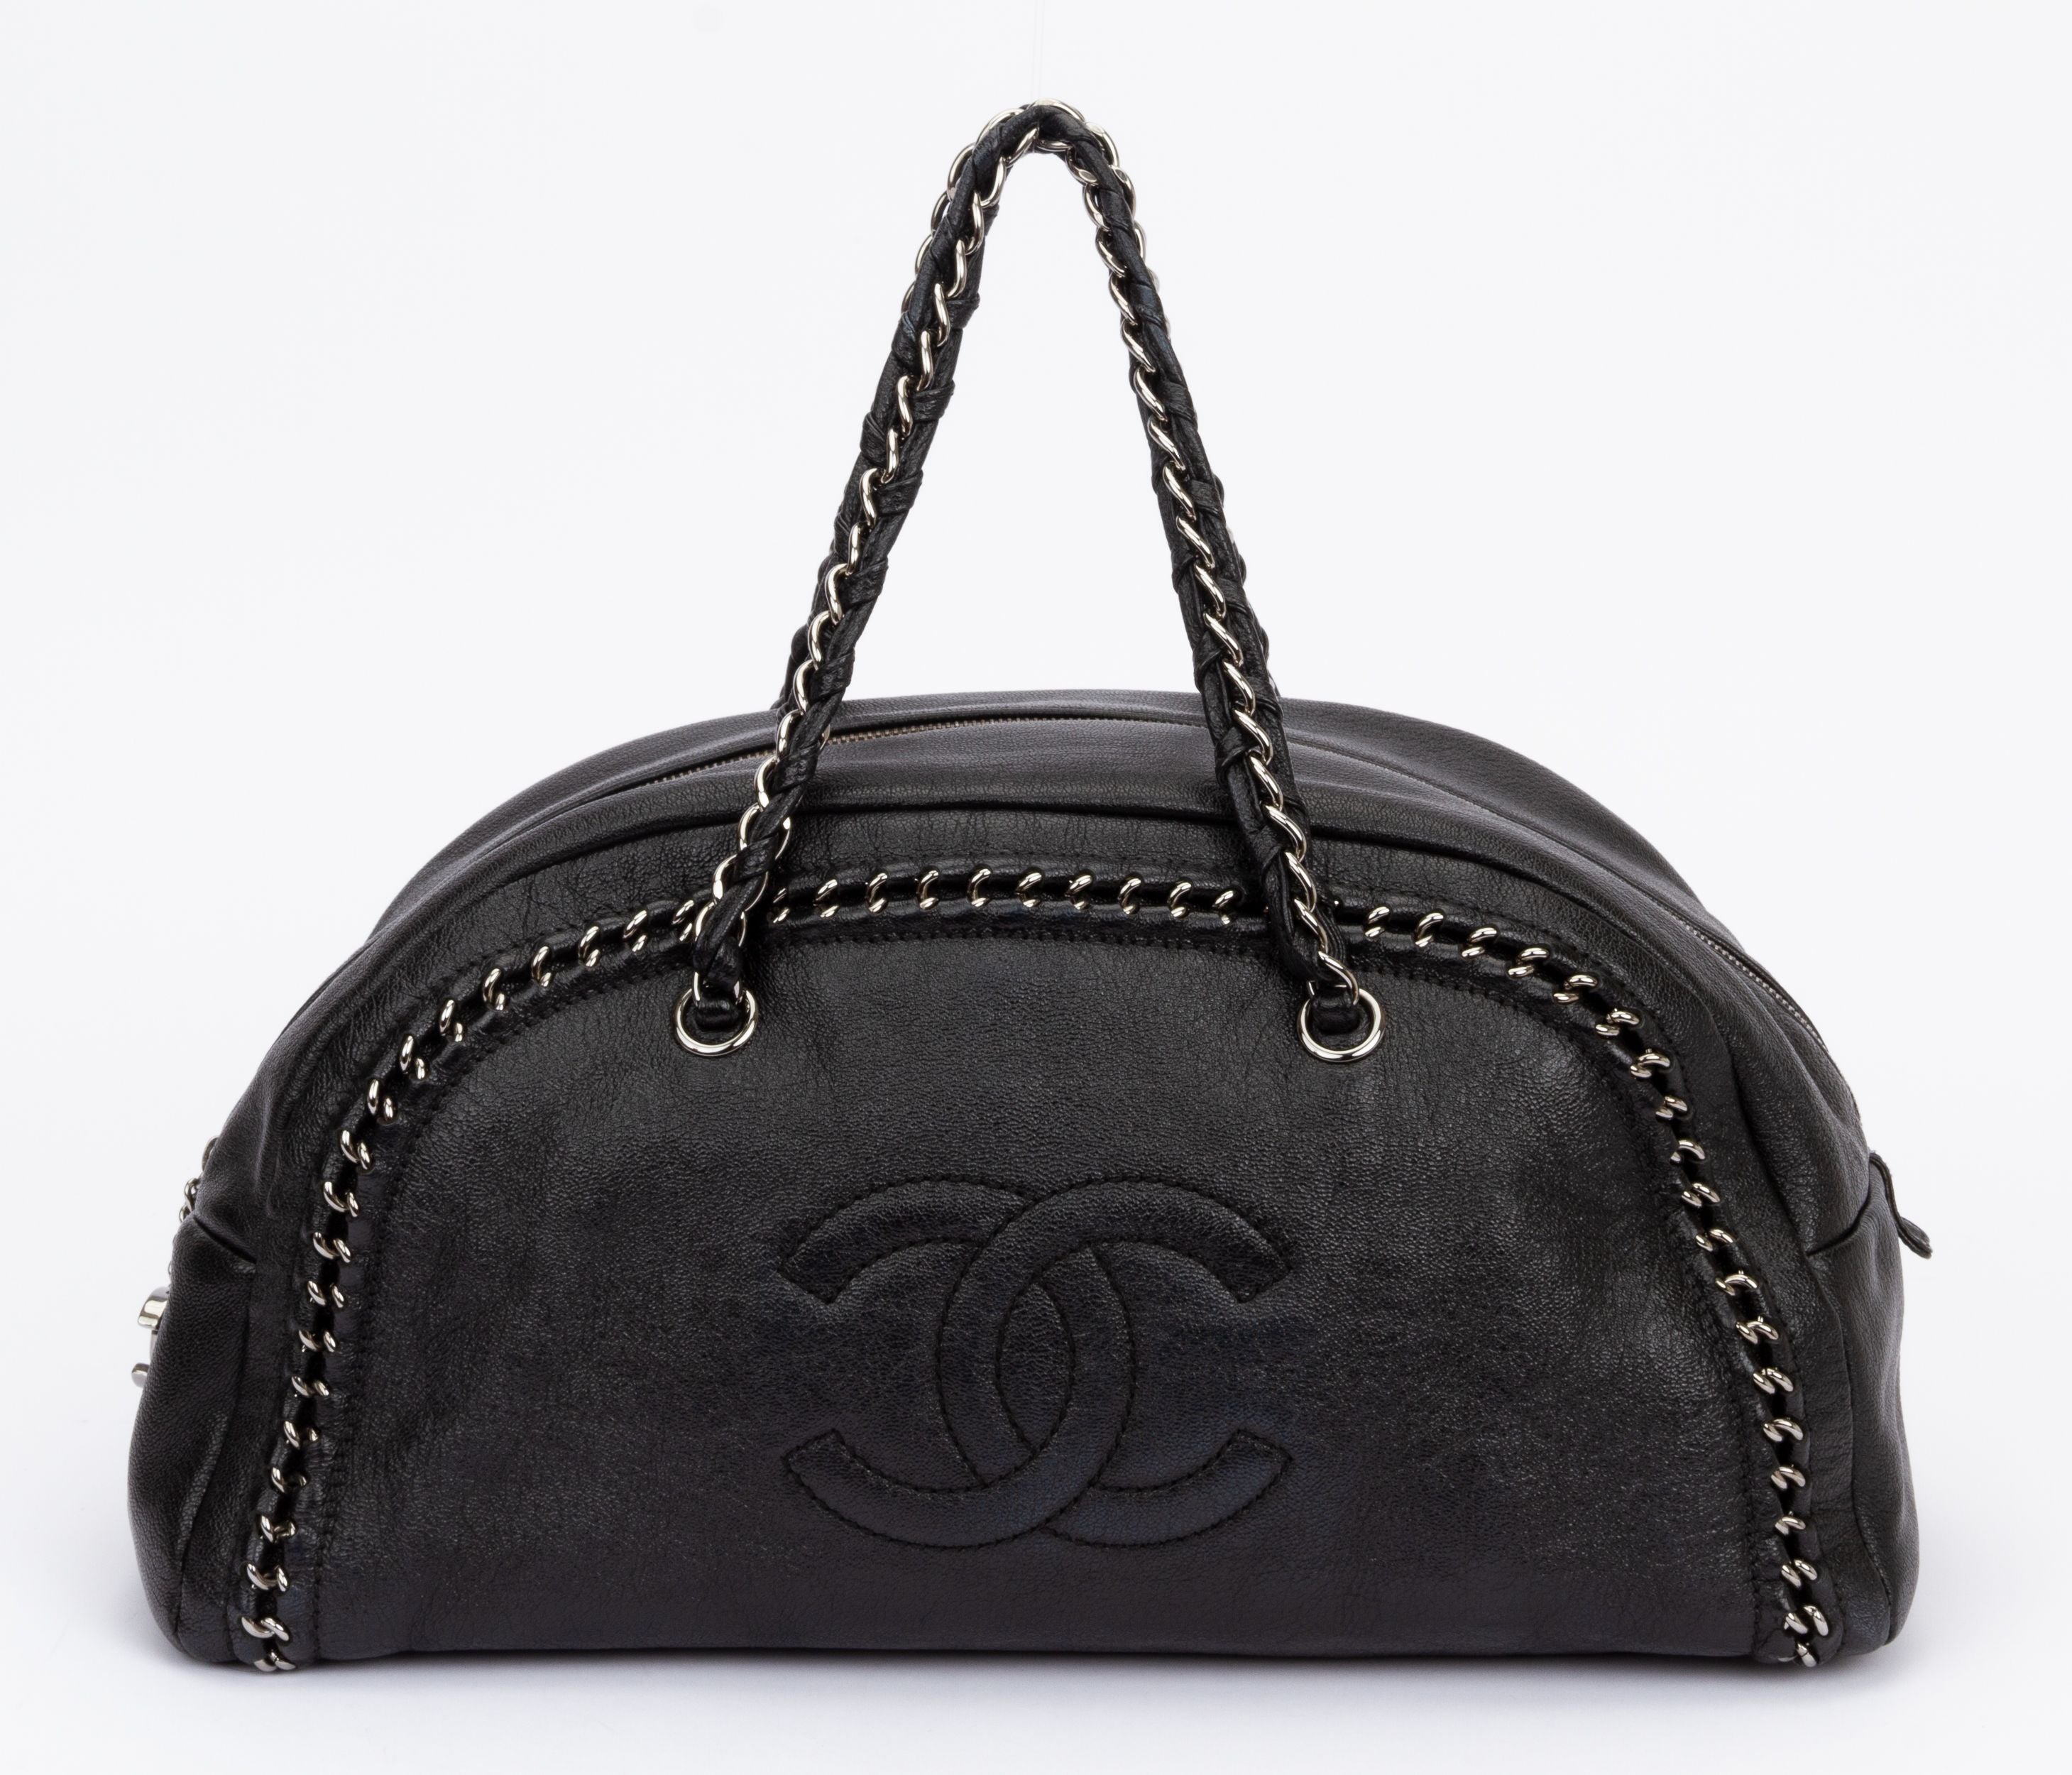 CHANEL - CC Ligne Flap Large Bag Black / Silver Caviar Leather